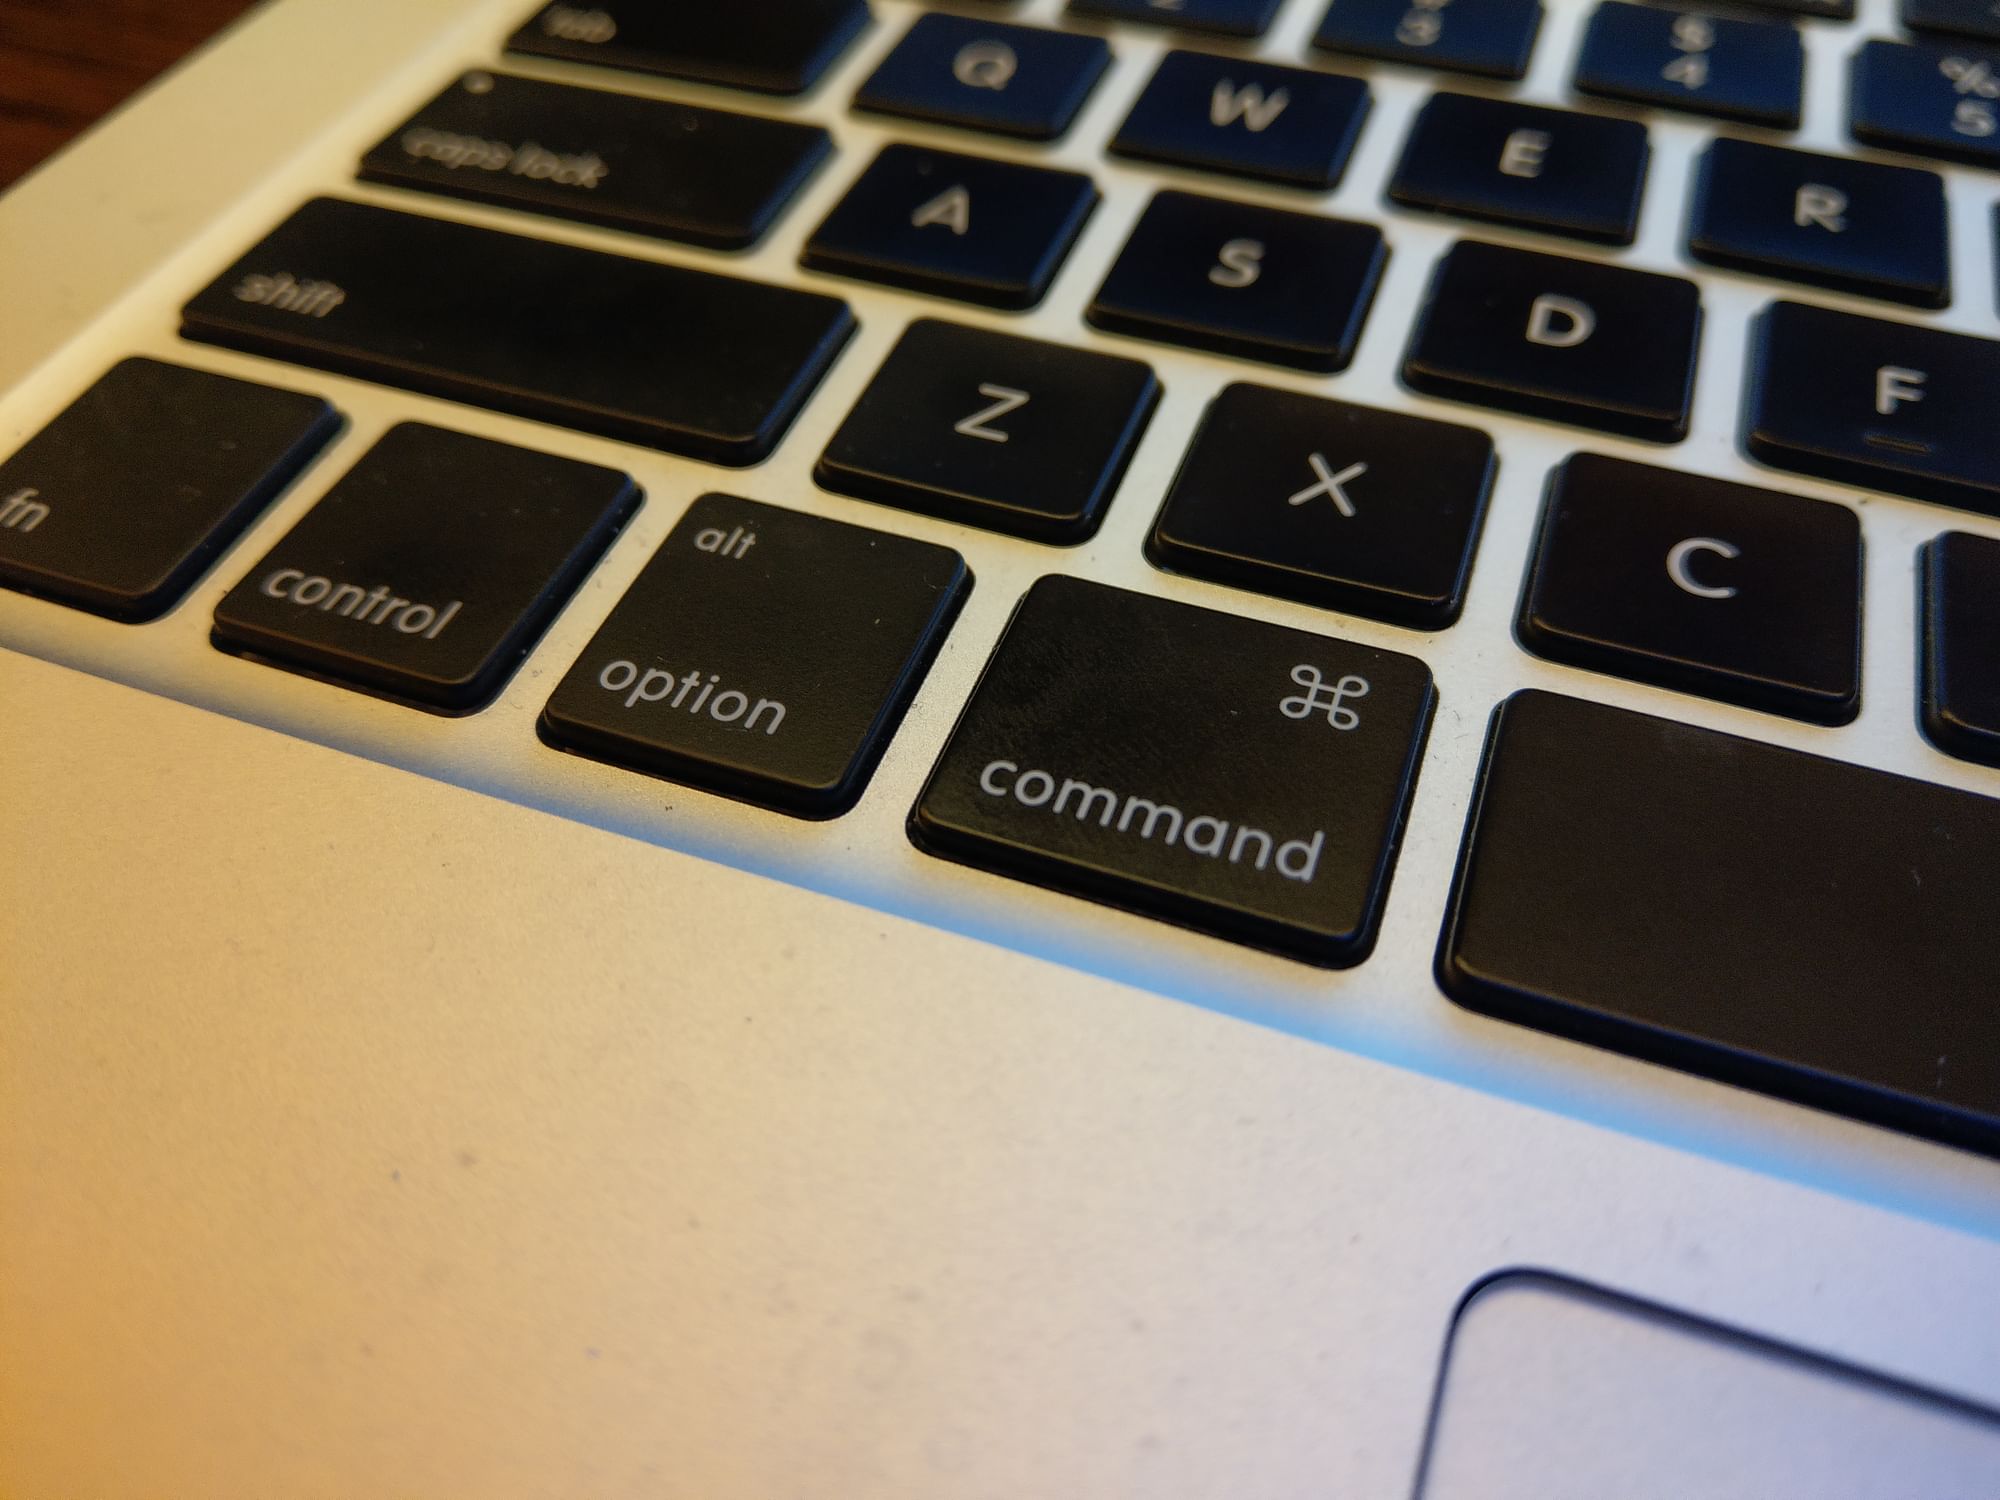 mac use windows keyboard